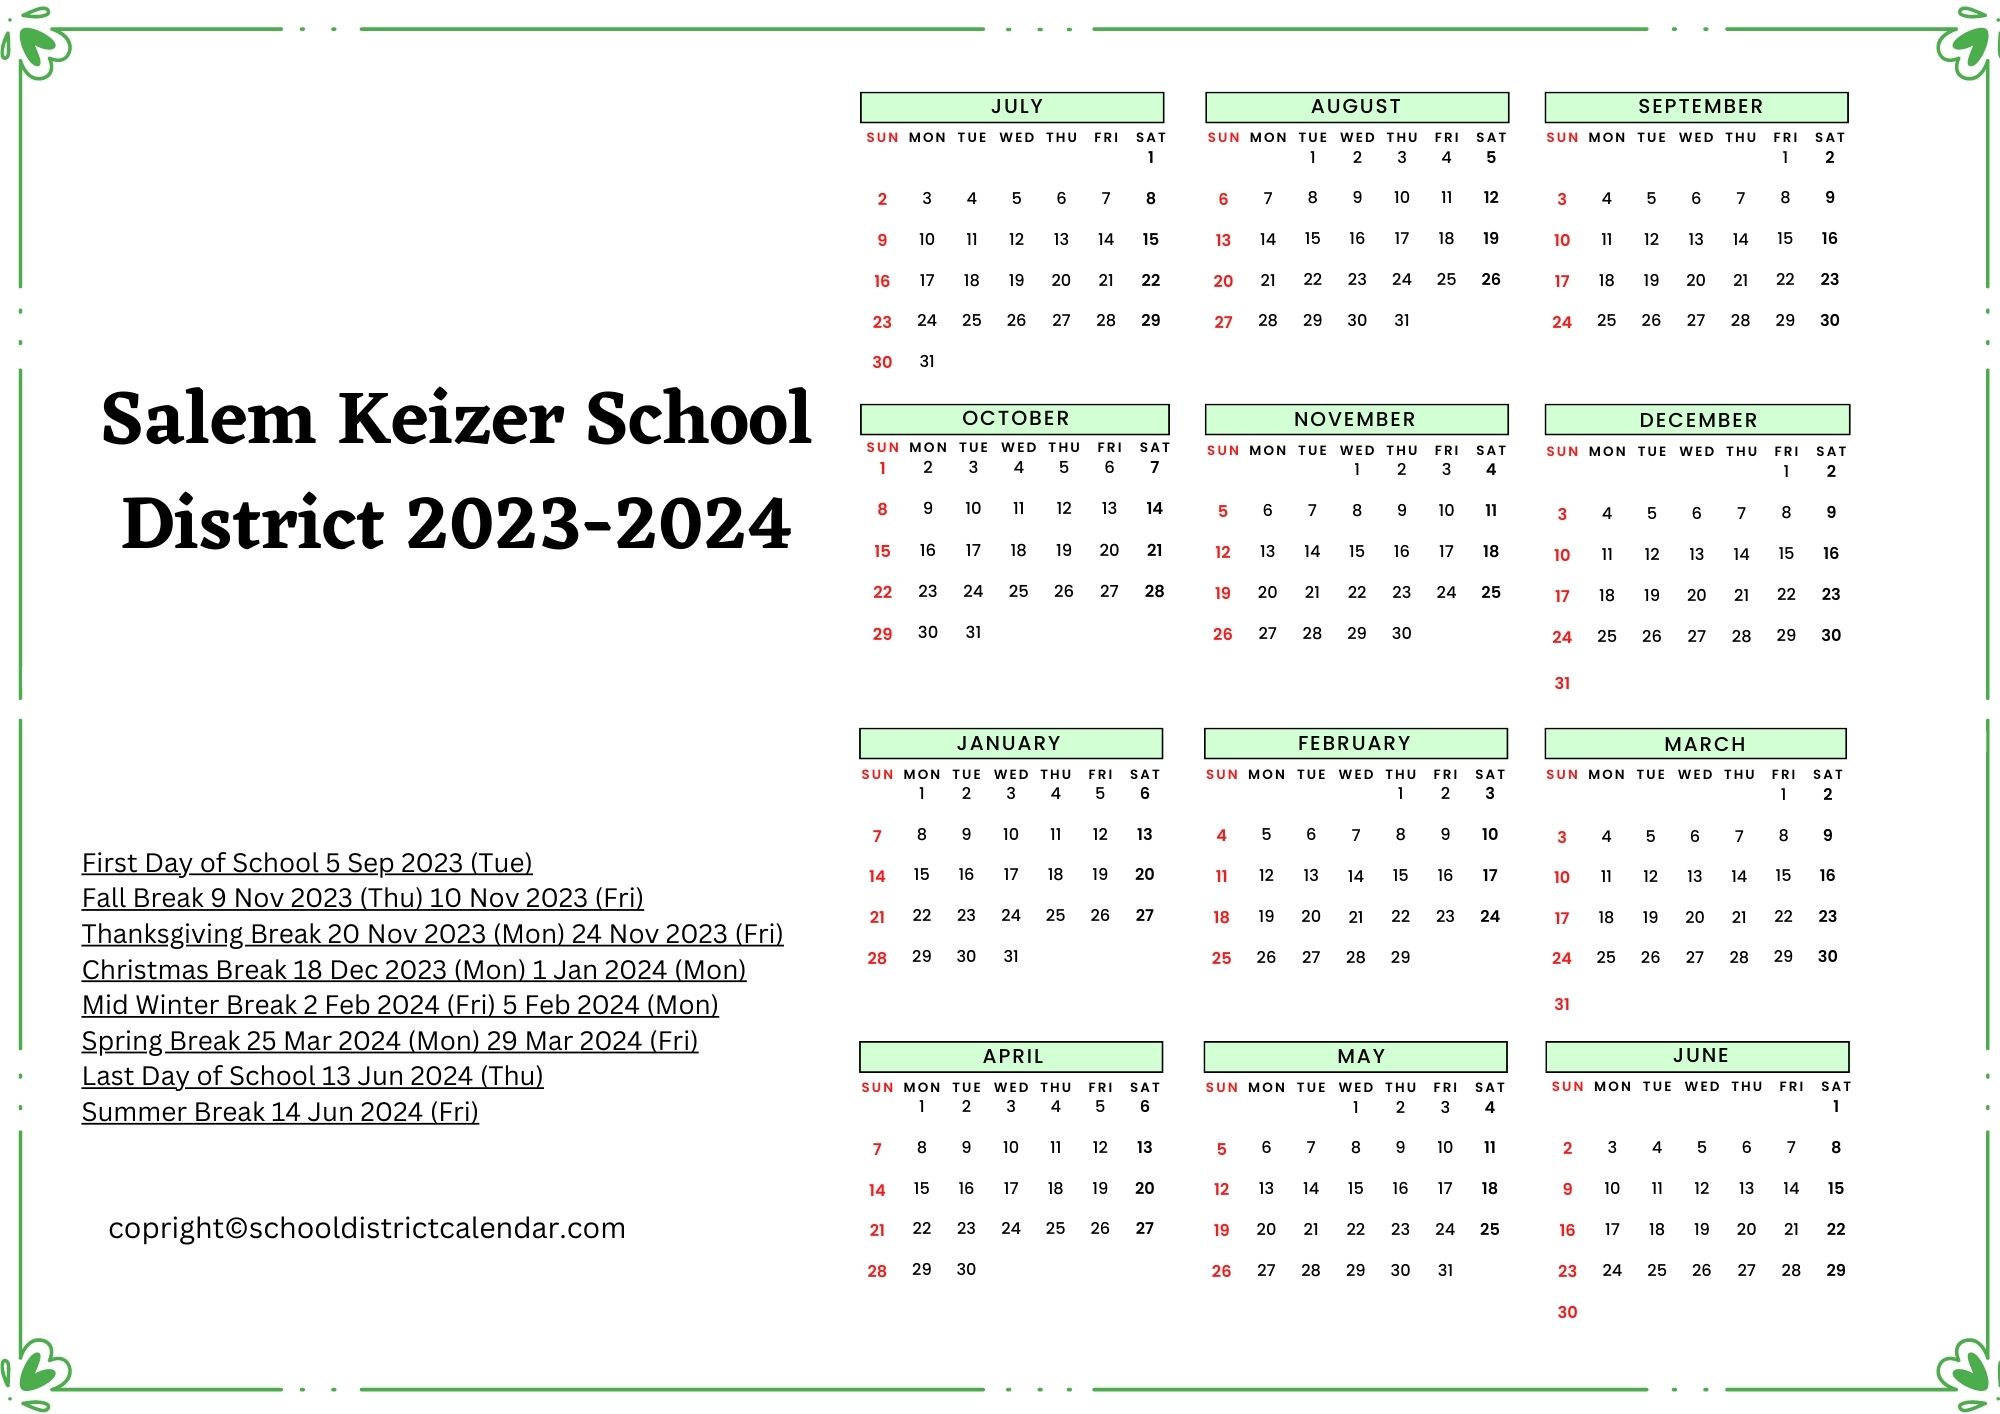 Salem Keizer School District Calendar Holidays 2023 2024